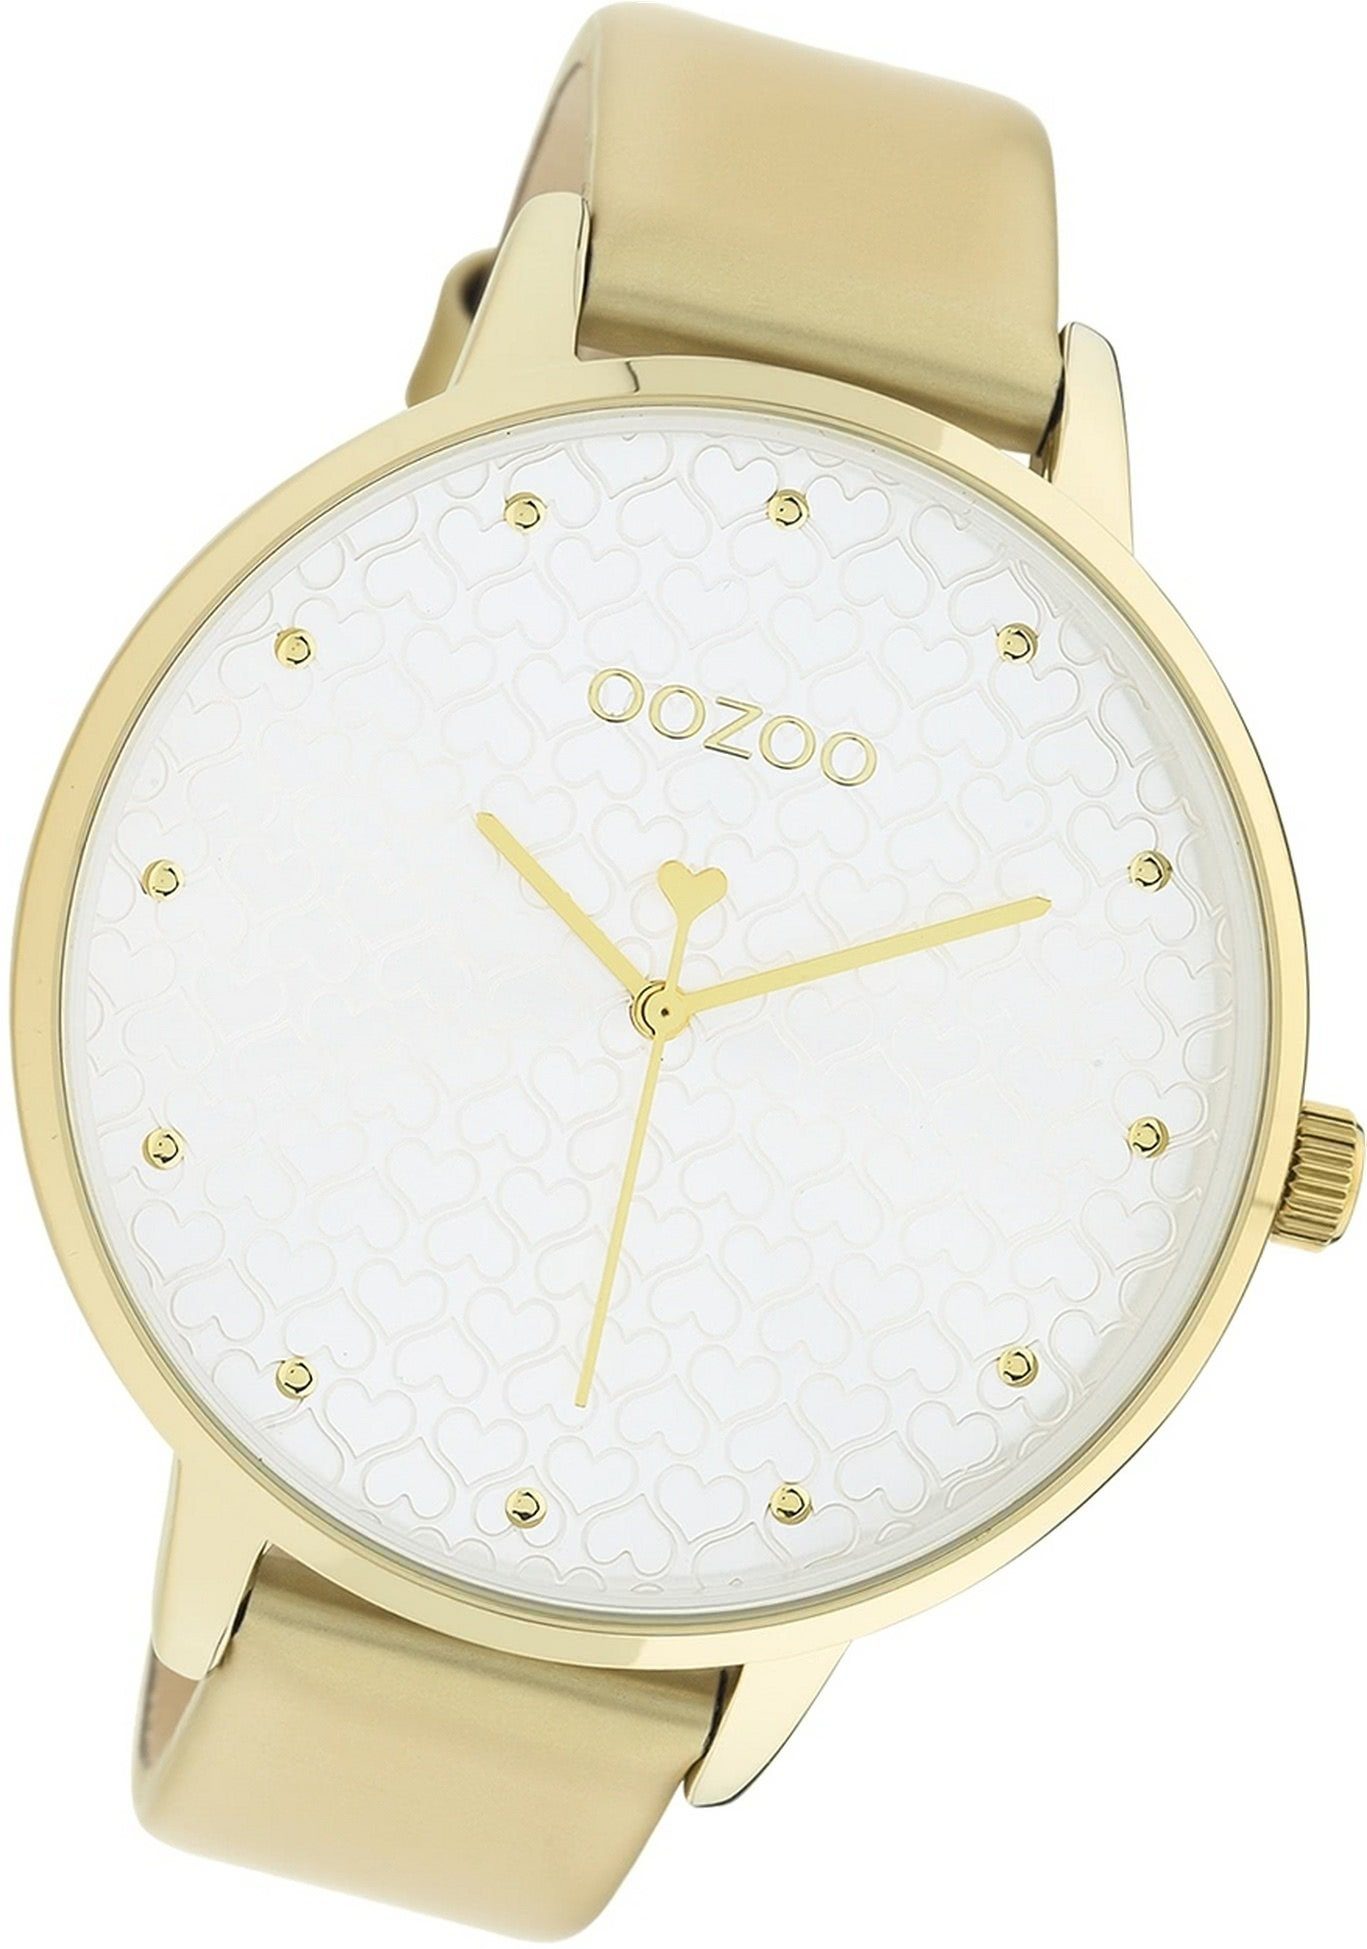 Gehäuse, Damen Quarzuhr Lederarmband 48mm) Damenuhr groß rundes gold, Armbanduhr extra Oozoo Timepieces, (ca. OOZOO